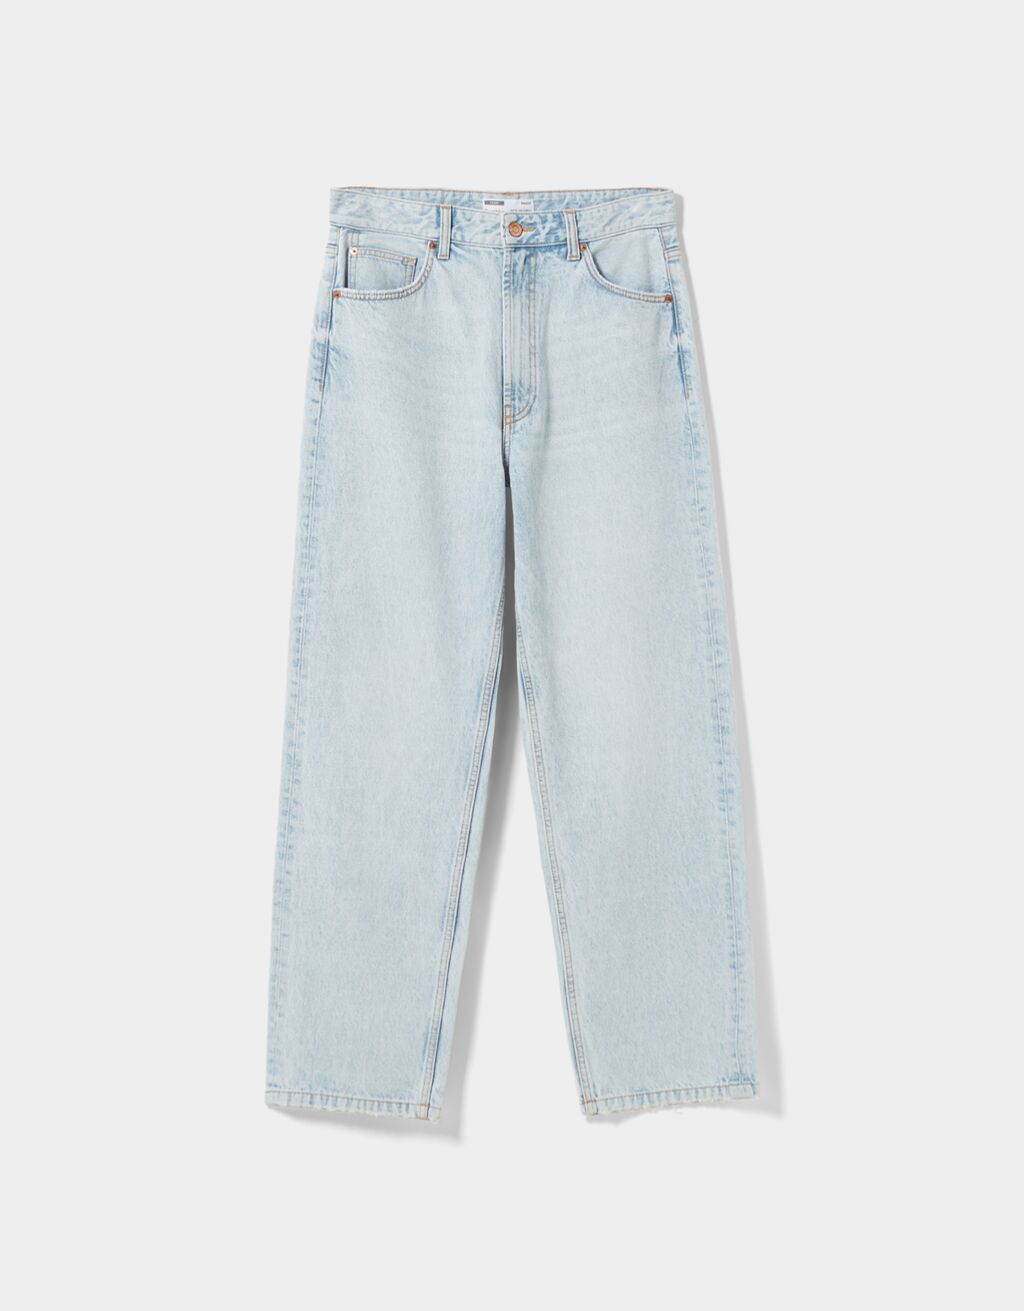 MEN FASHION Jeans Worn-in Bershka shorts jeans discount 70% White 40                  EU 